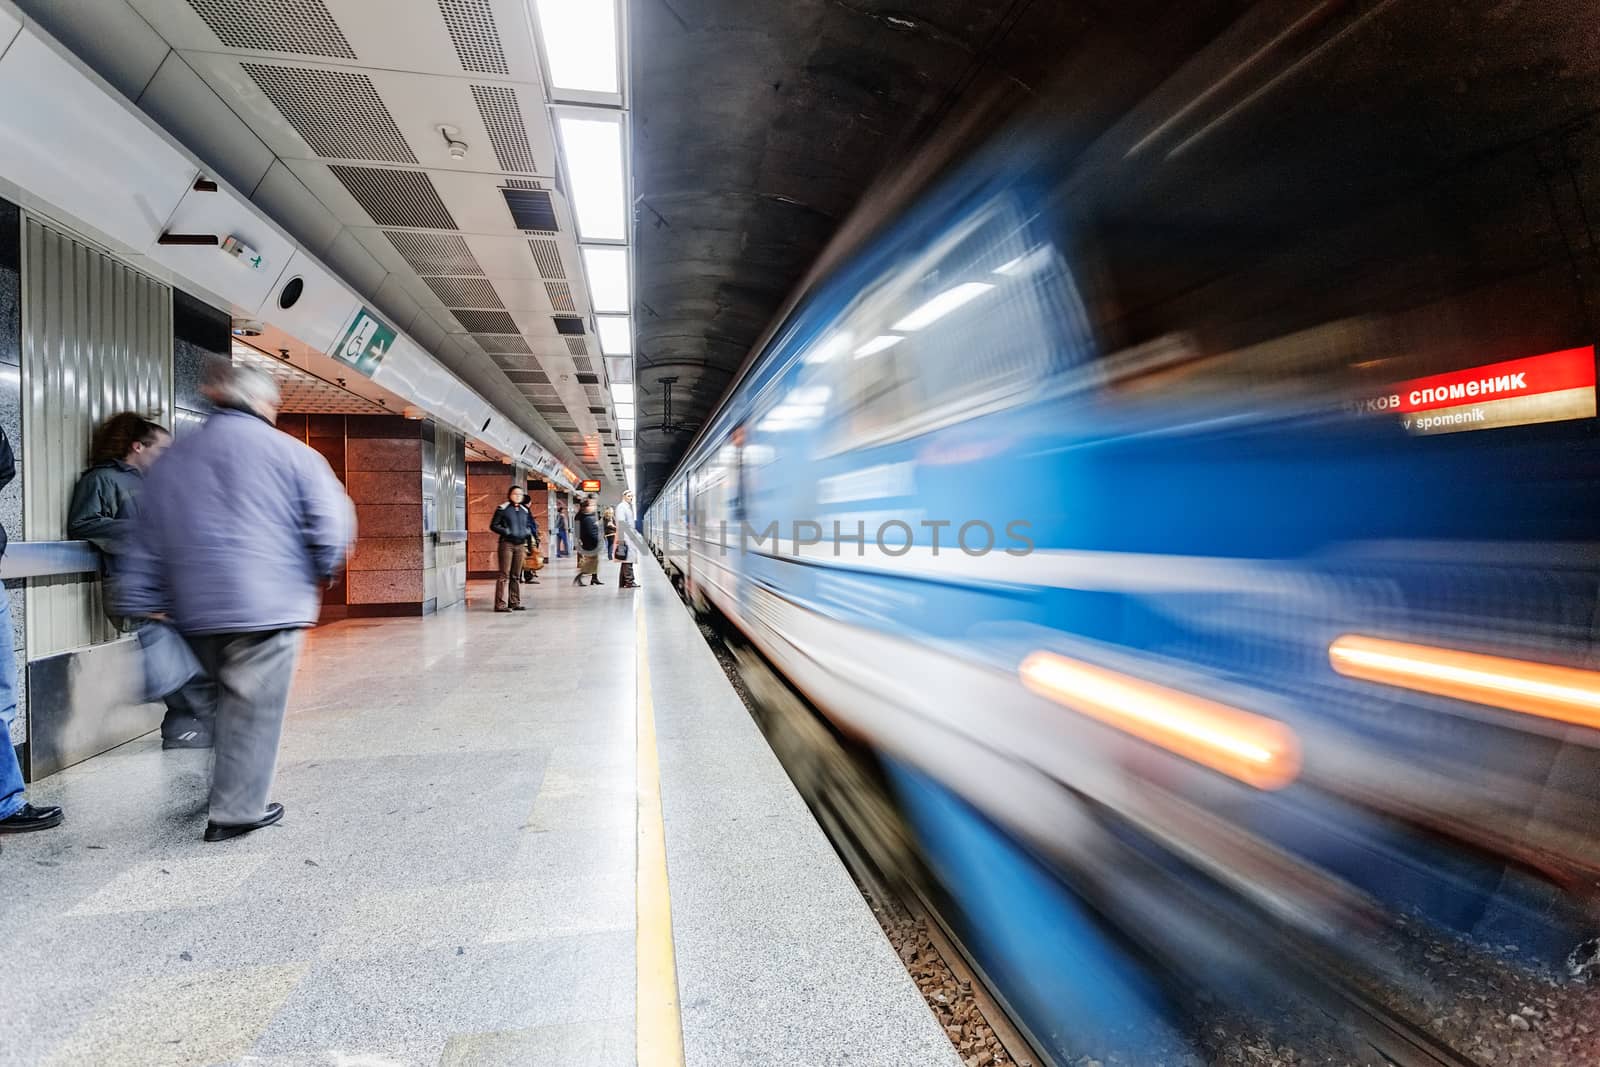 Blurred train by vladimirnenezic